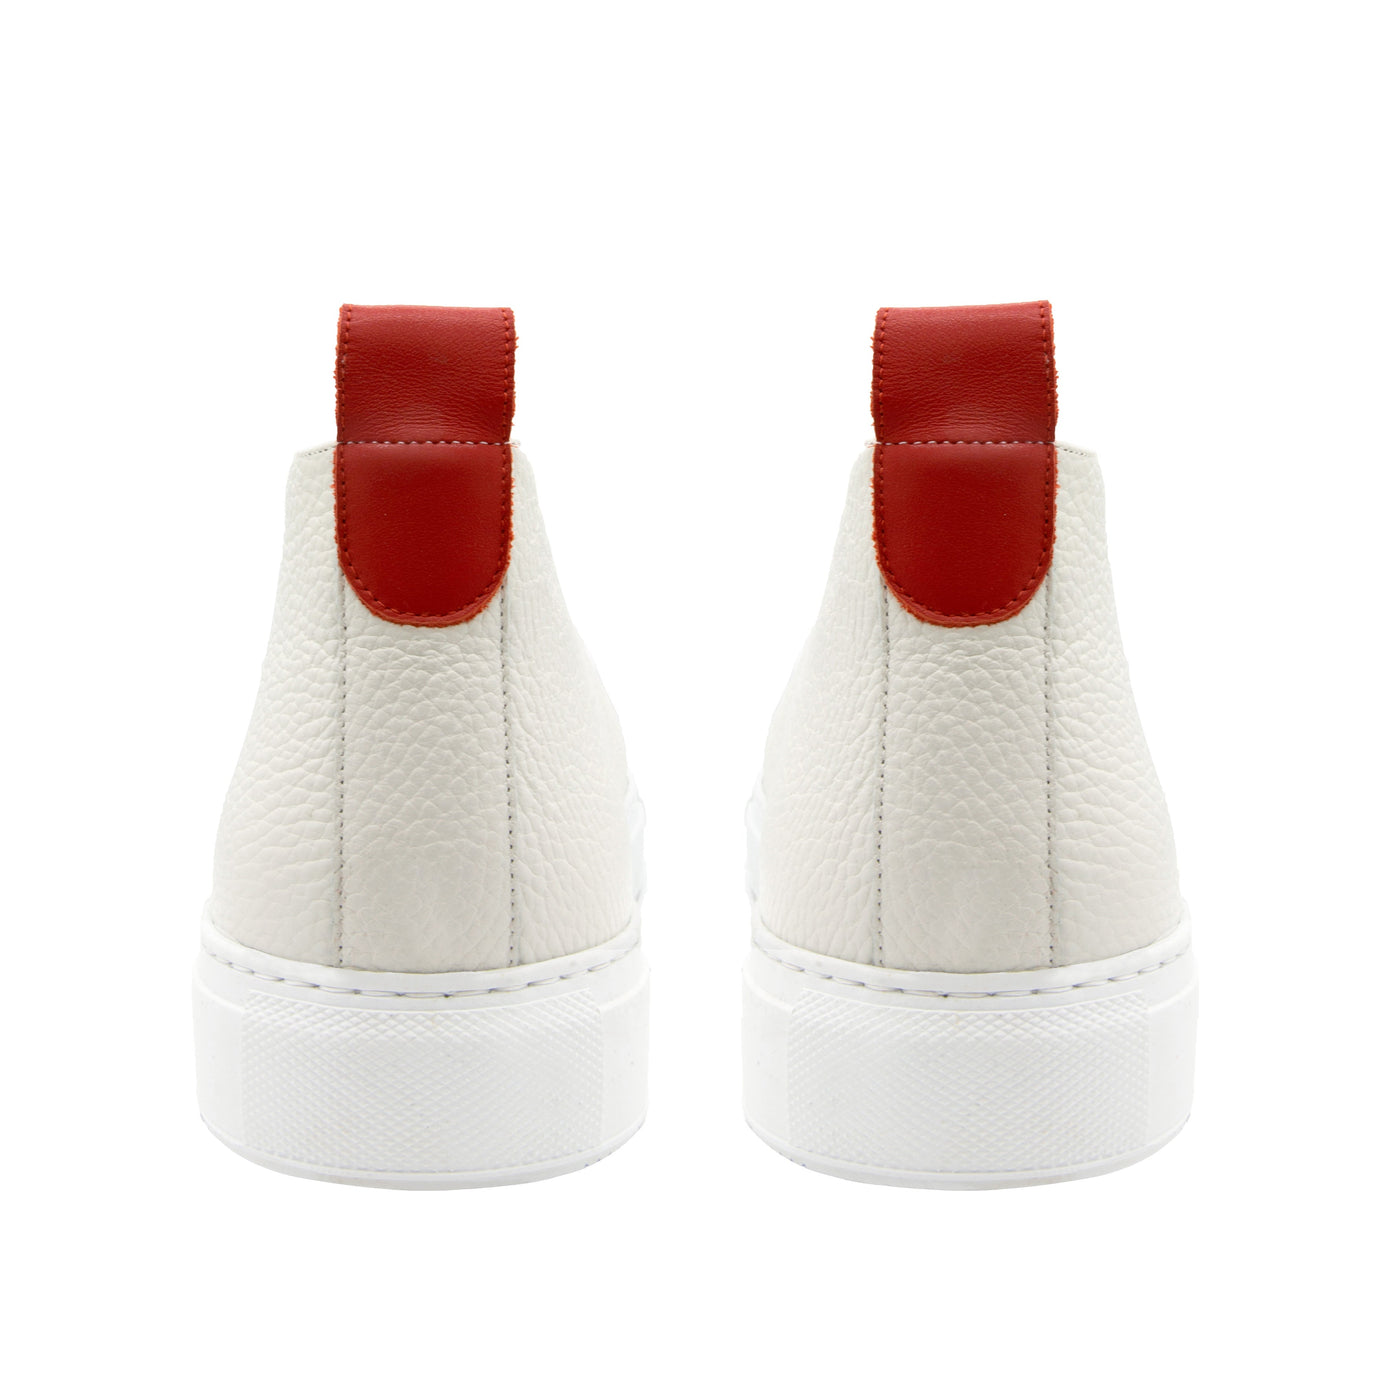 Men's White Leather Chukka Sneaker by Del Toro Shoes